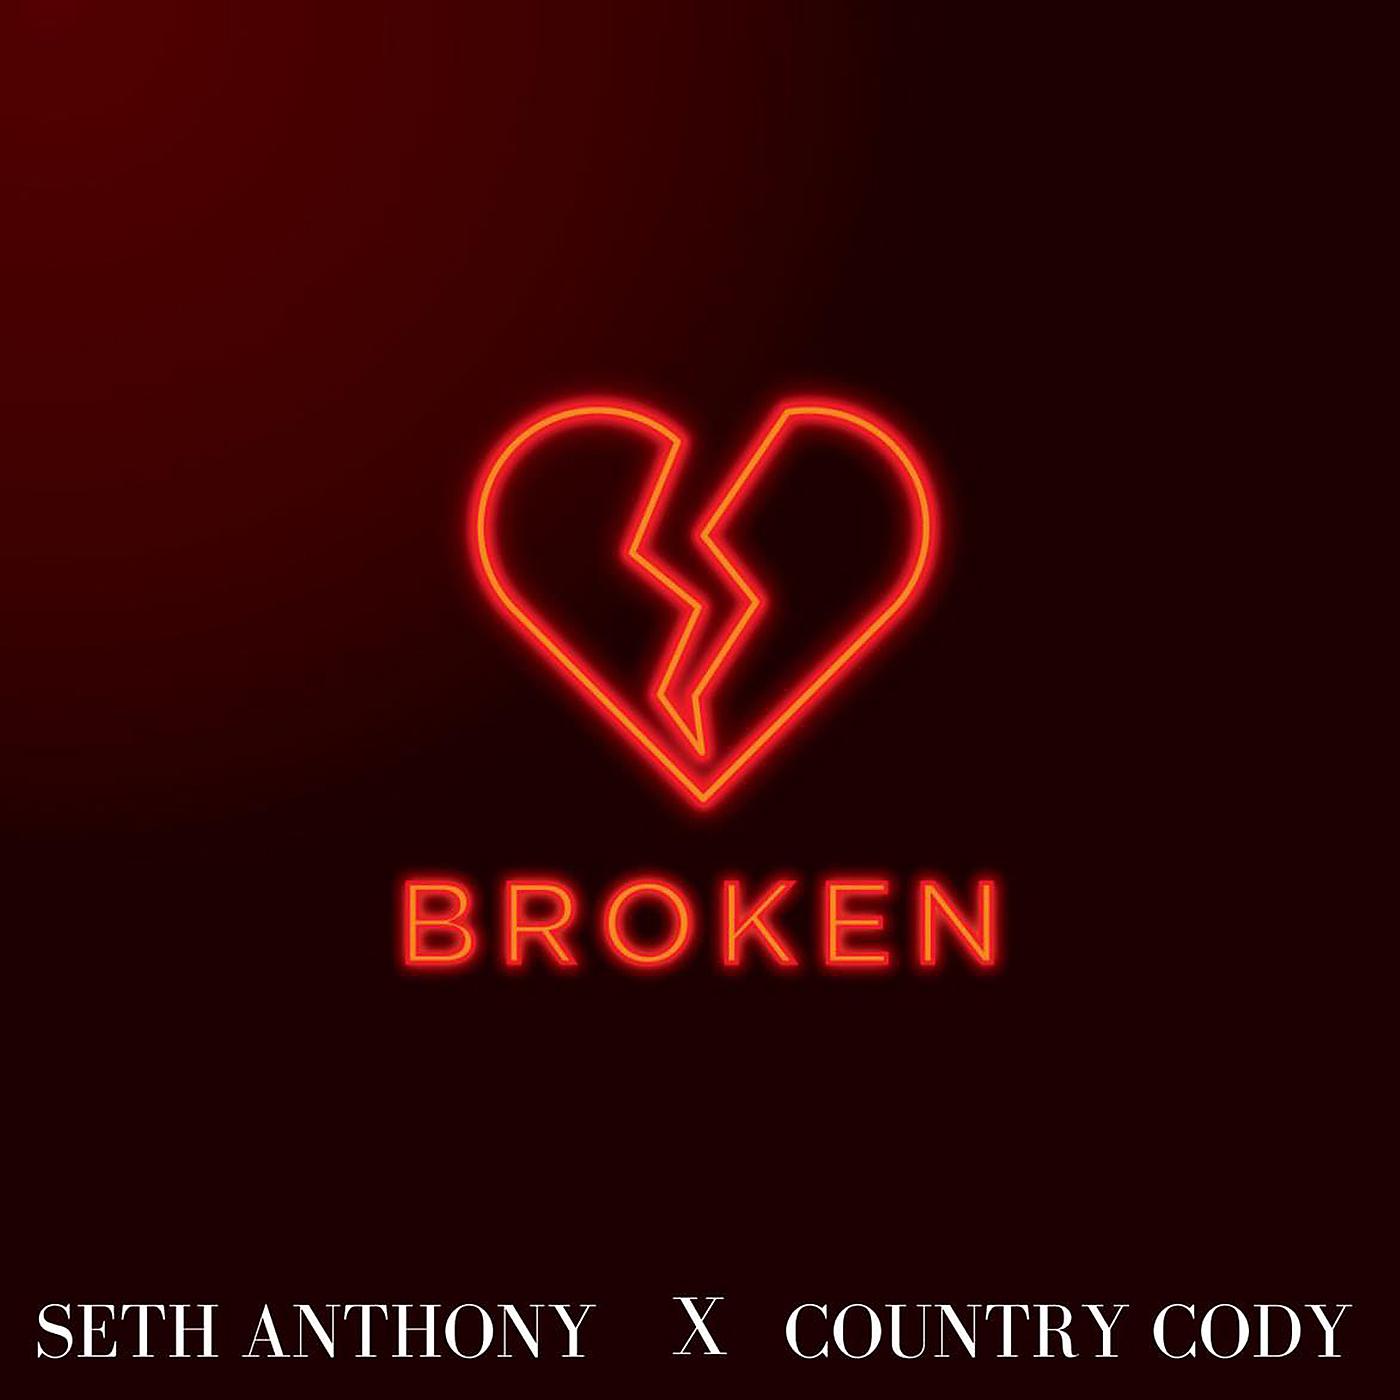 Постер альбома Heartbroken